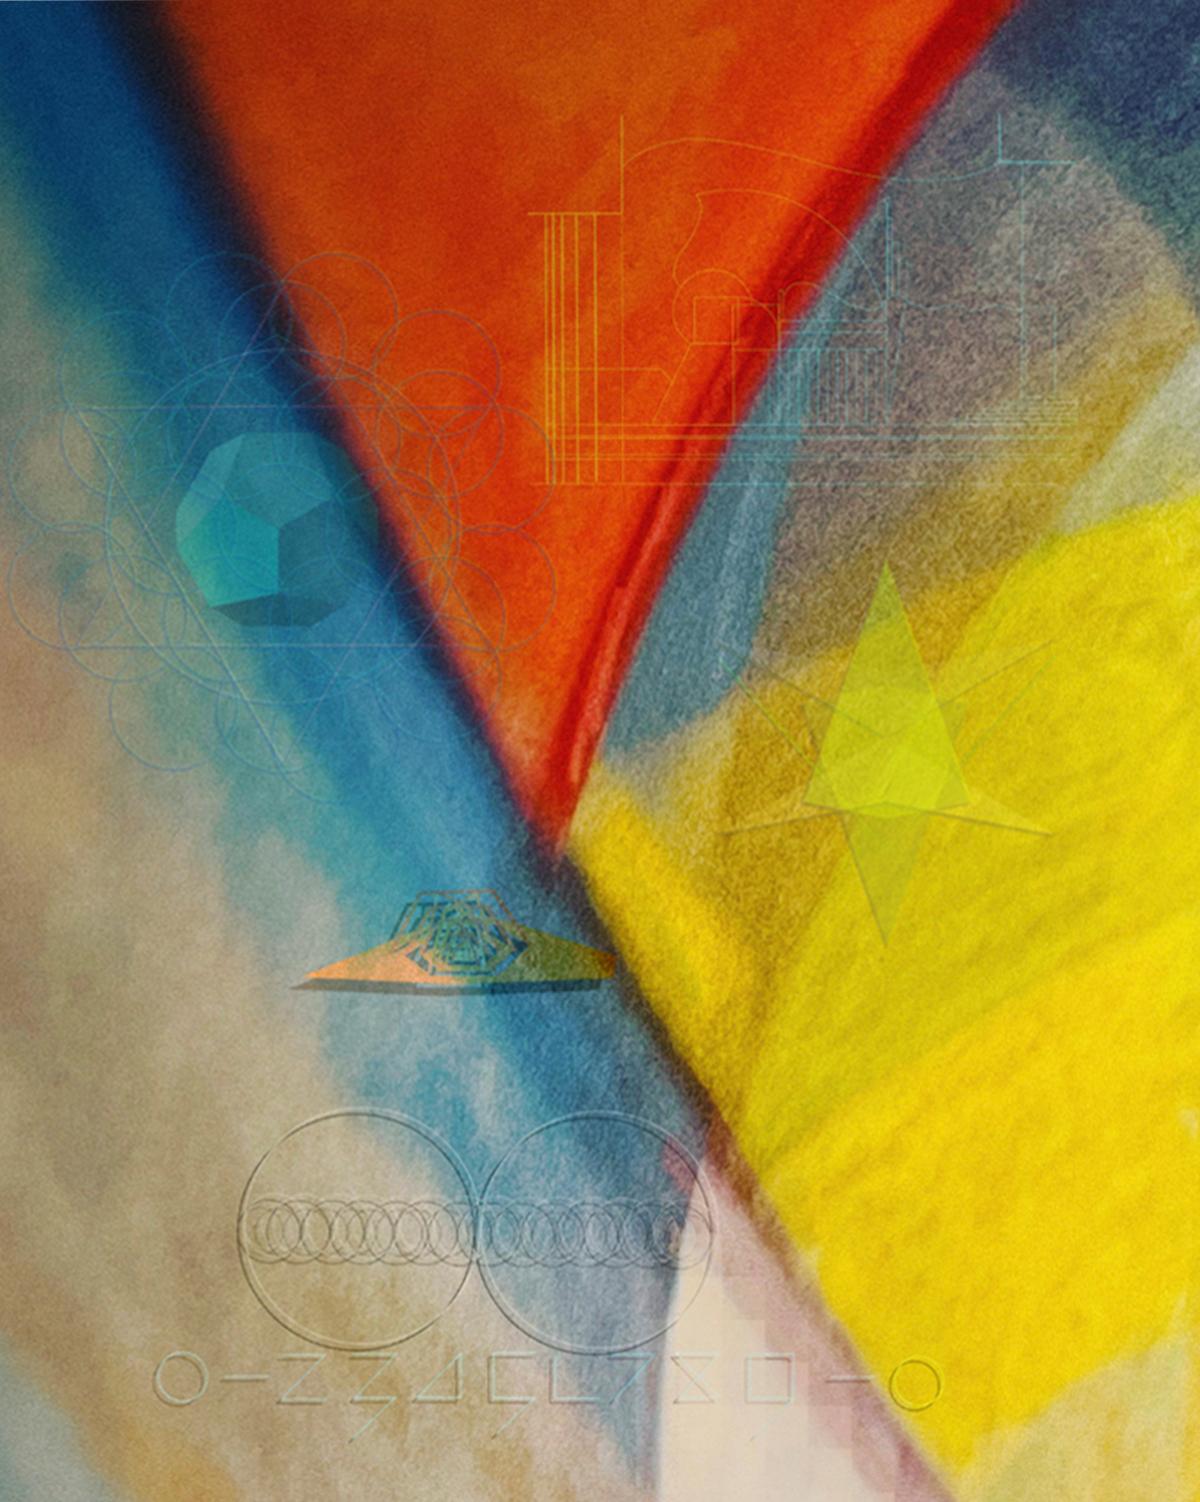 Monika Bravo Color Photograph - Arcana 16. Abstract color photograph